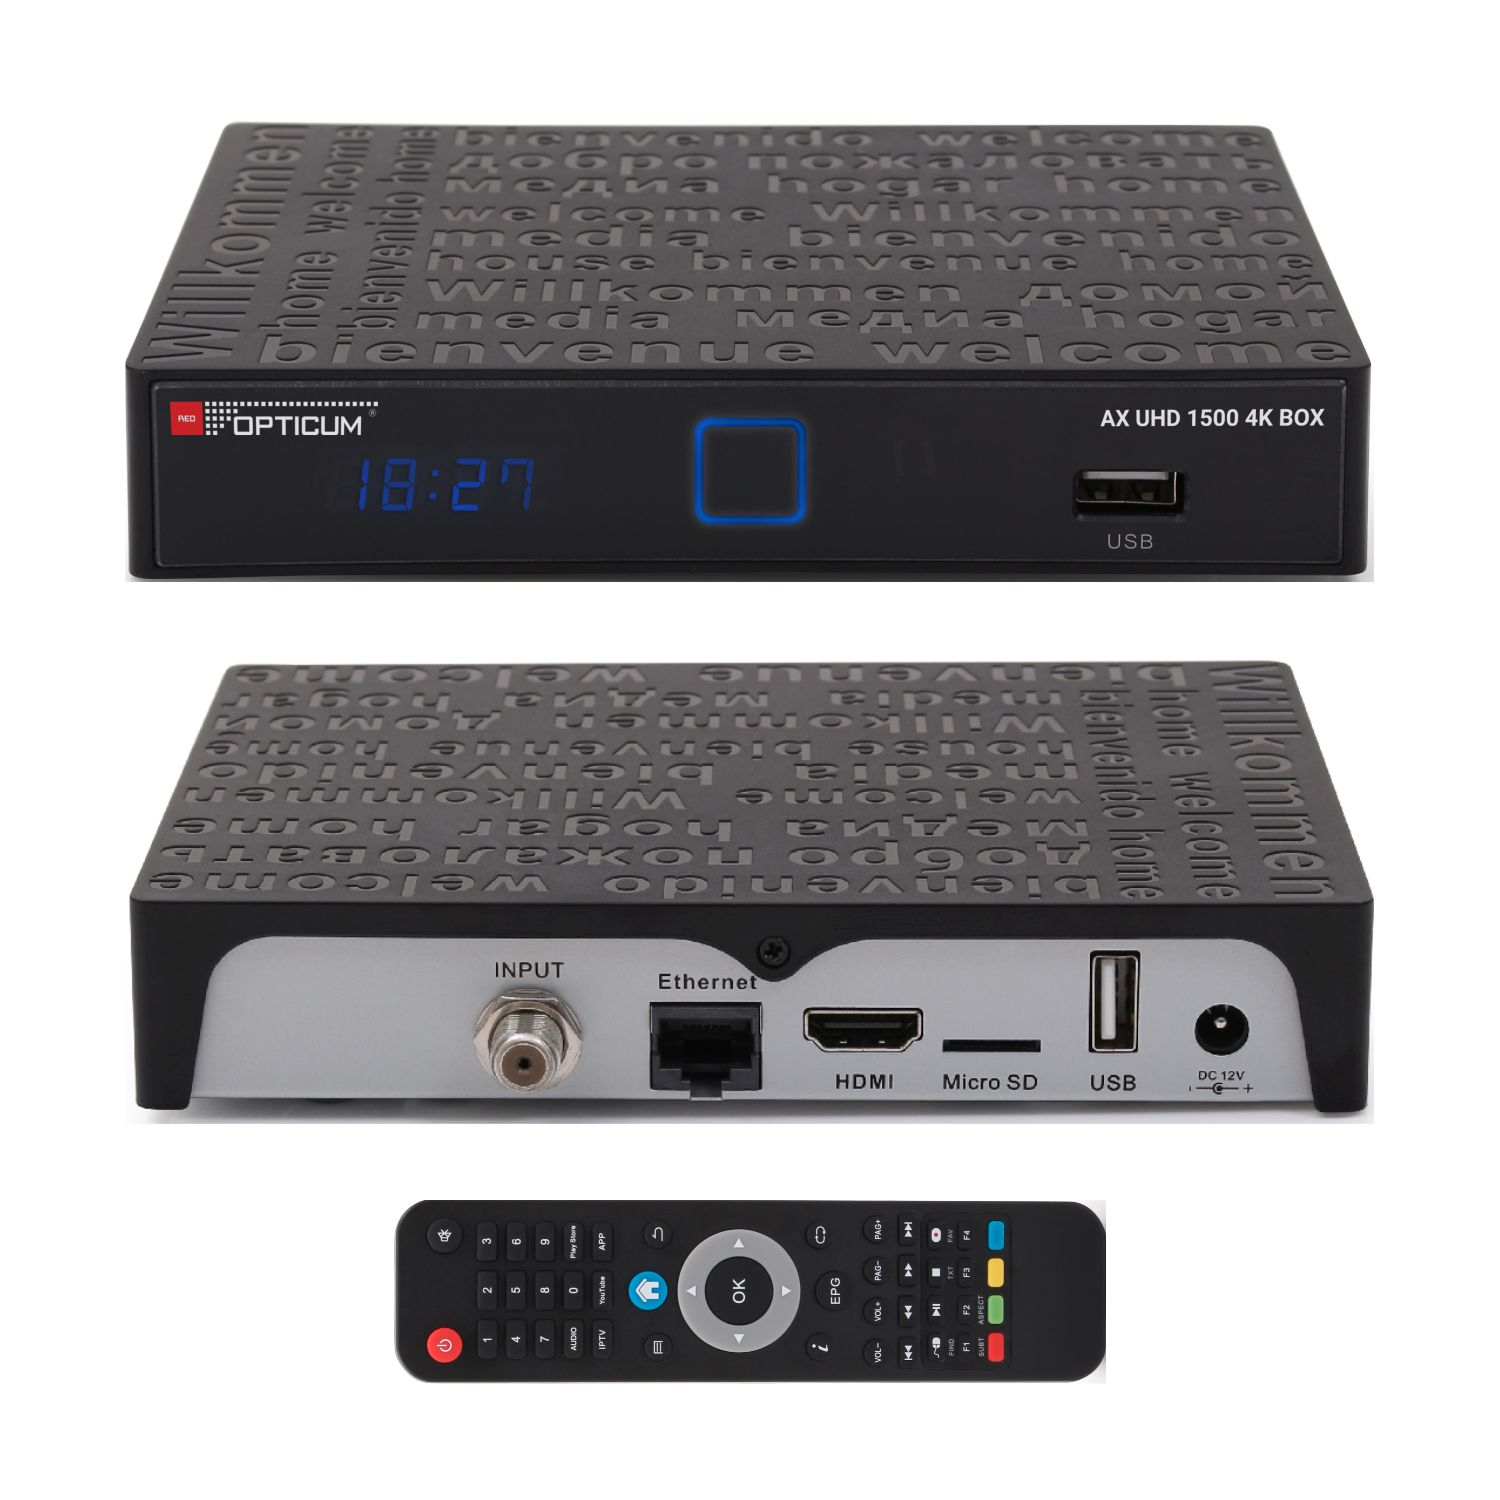 RED OPTICUM AX UHD Receiver Android Receiver 4K 4K Ultra DVB-S, schwarz PVR Ready PVR-Funktion, DVB-S2, 1500 Box DVB-S2 schwarz) HD HD DVB-S2 (HDTV